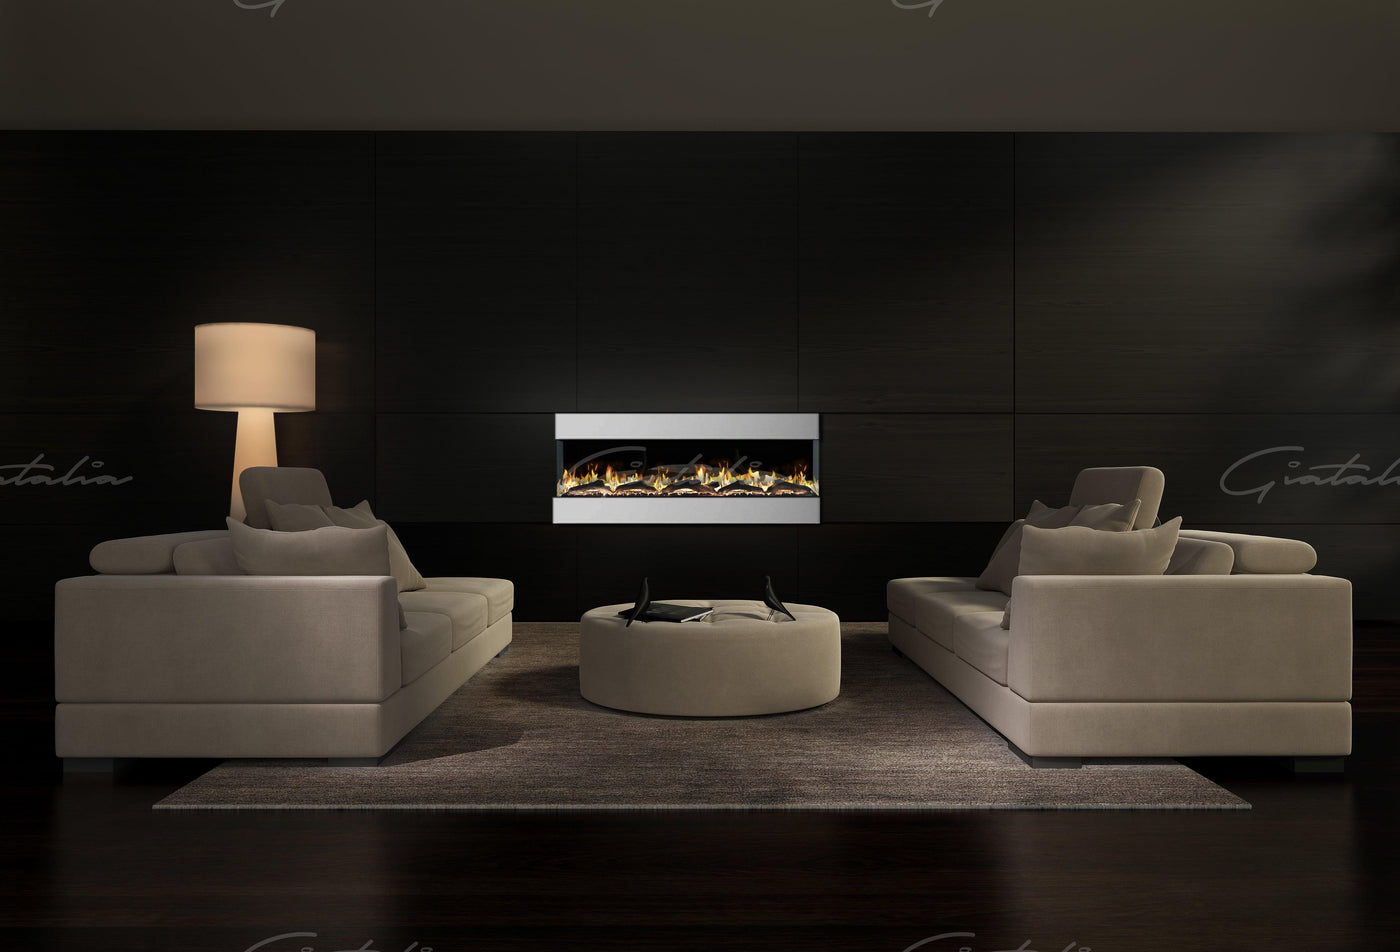 Mirage Panoramic Electric Media Wall HD LED Mantel Inset Fire Black - 50"-Esme Furnishings